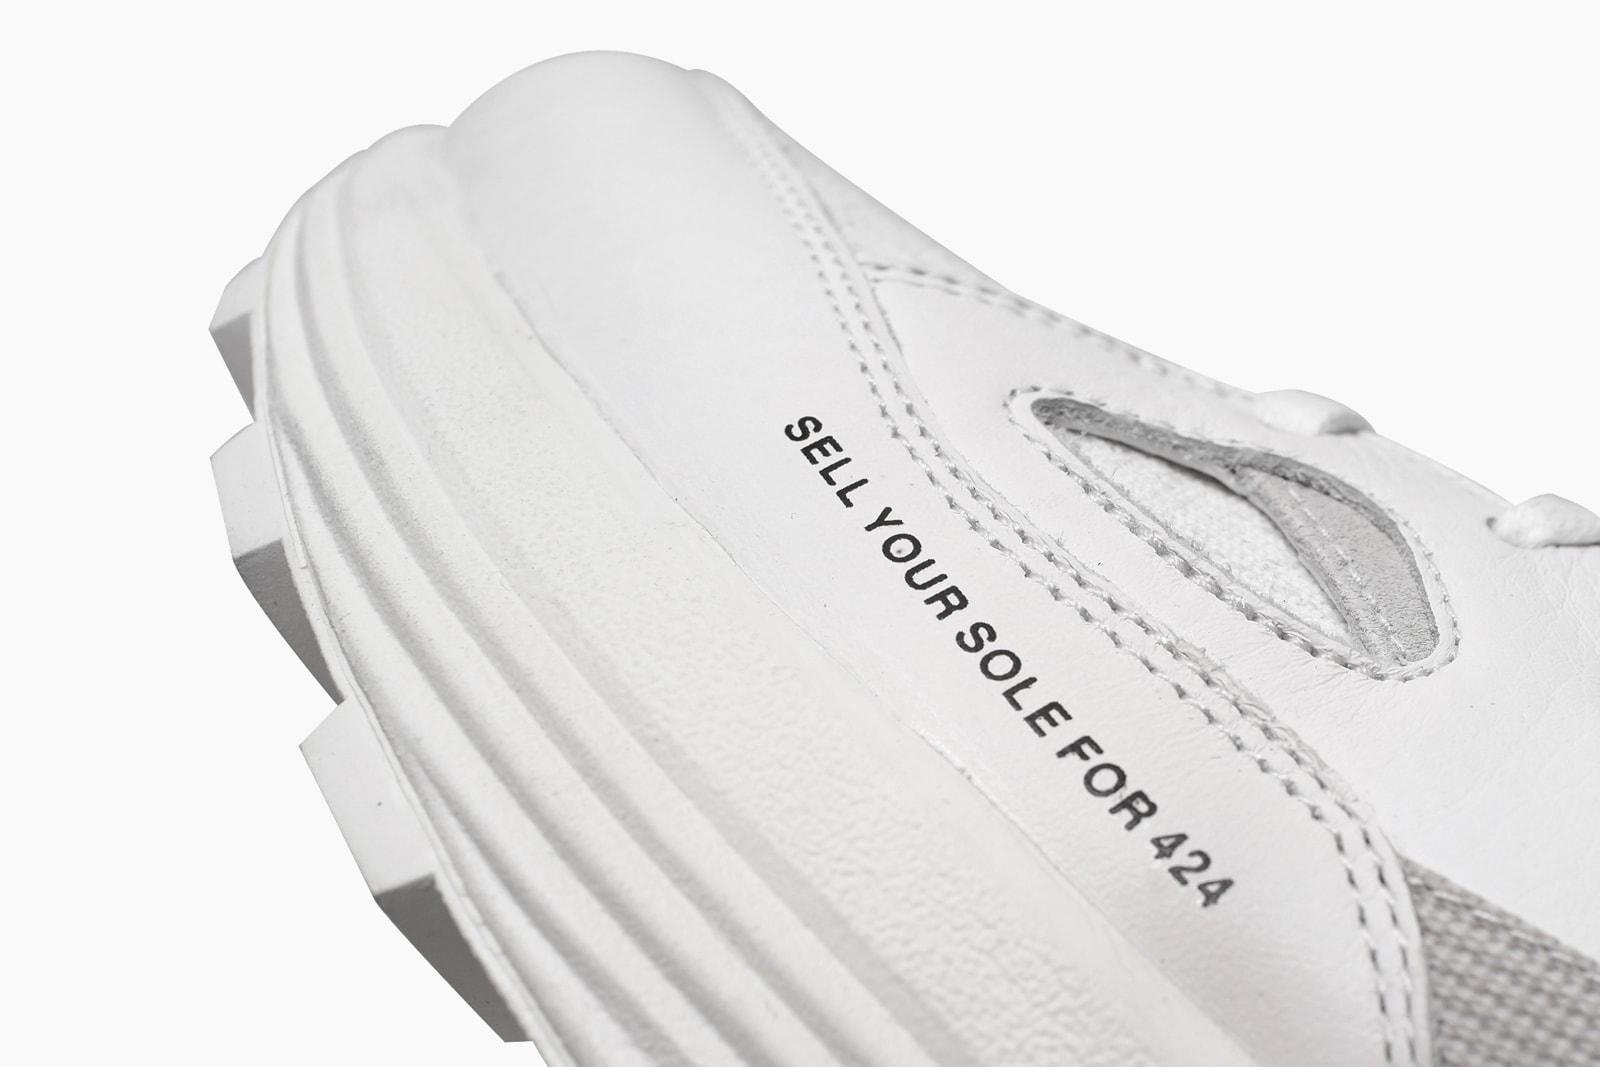 Brandblack 424 Aura Sneaker Footwear Teaser